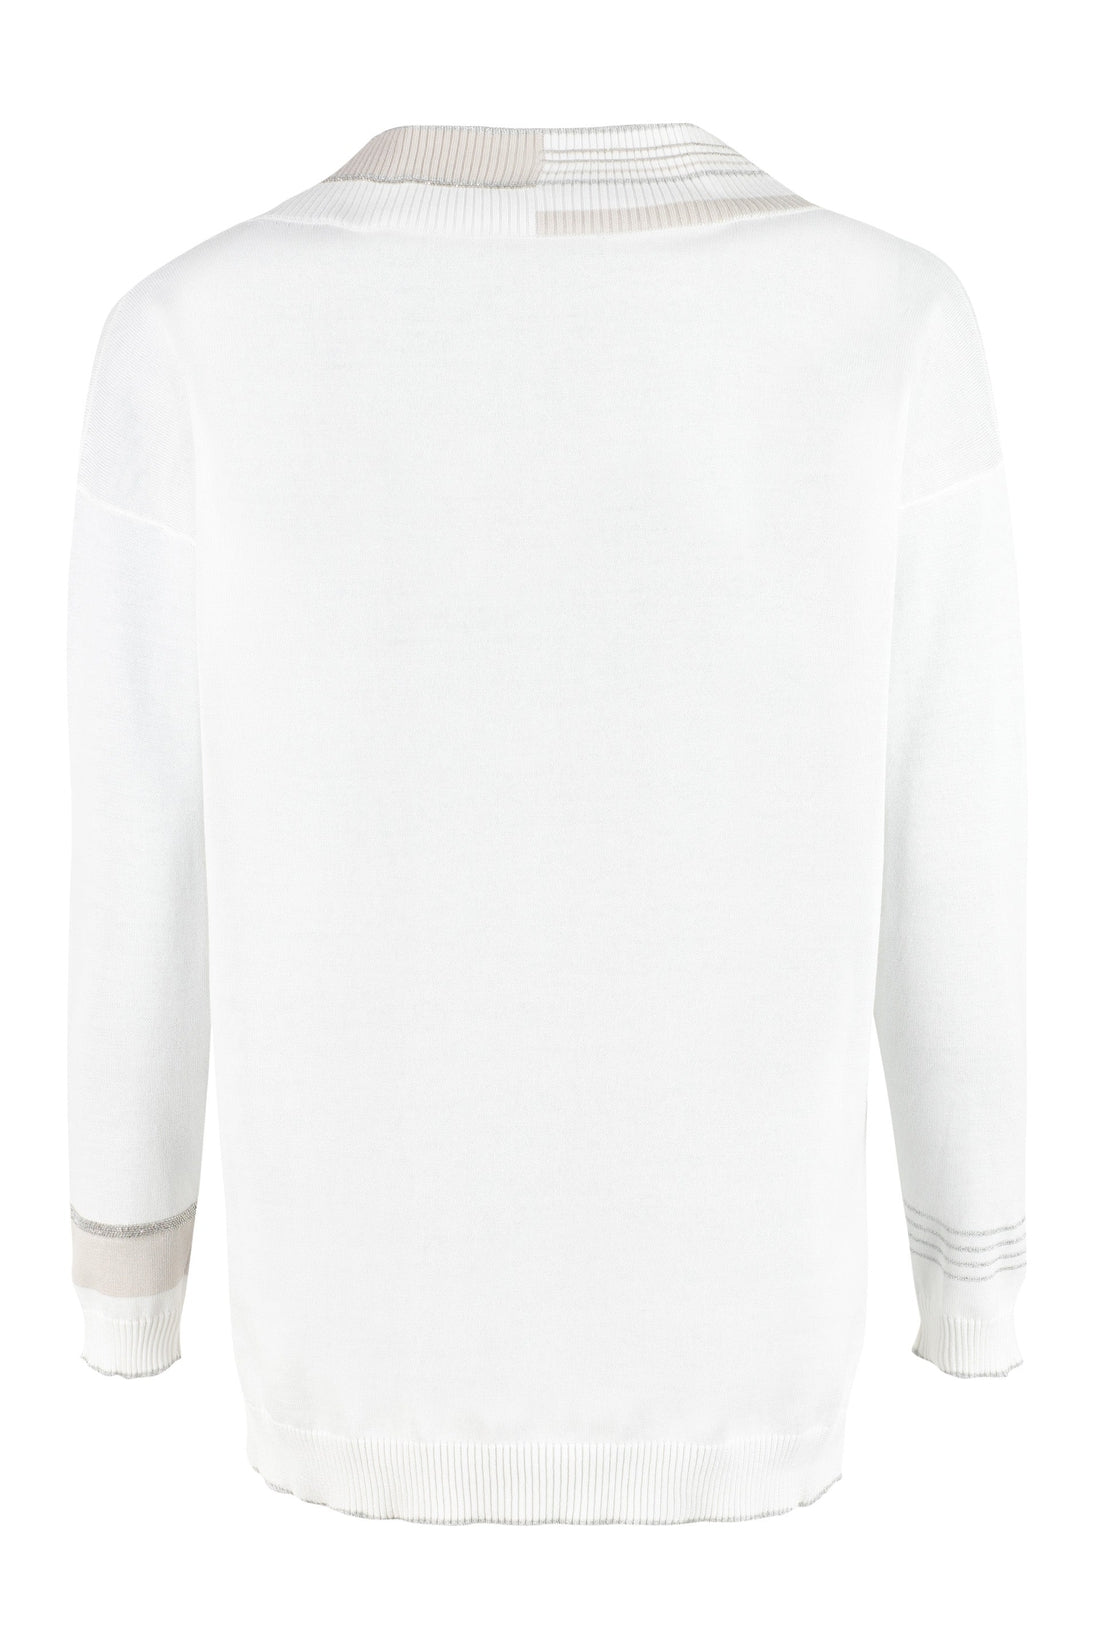 Fabiana Filippi-OUTLET-SALE-Cotton V-neck sweater-ARCHIVIST